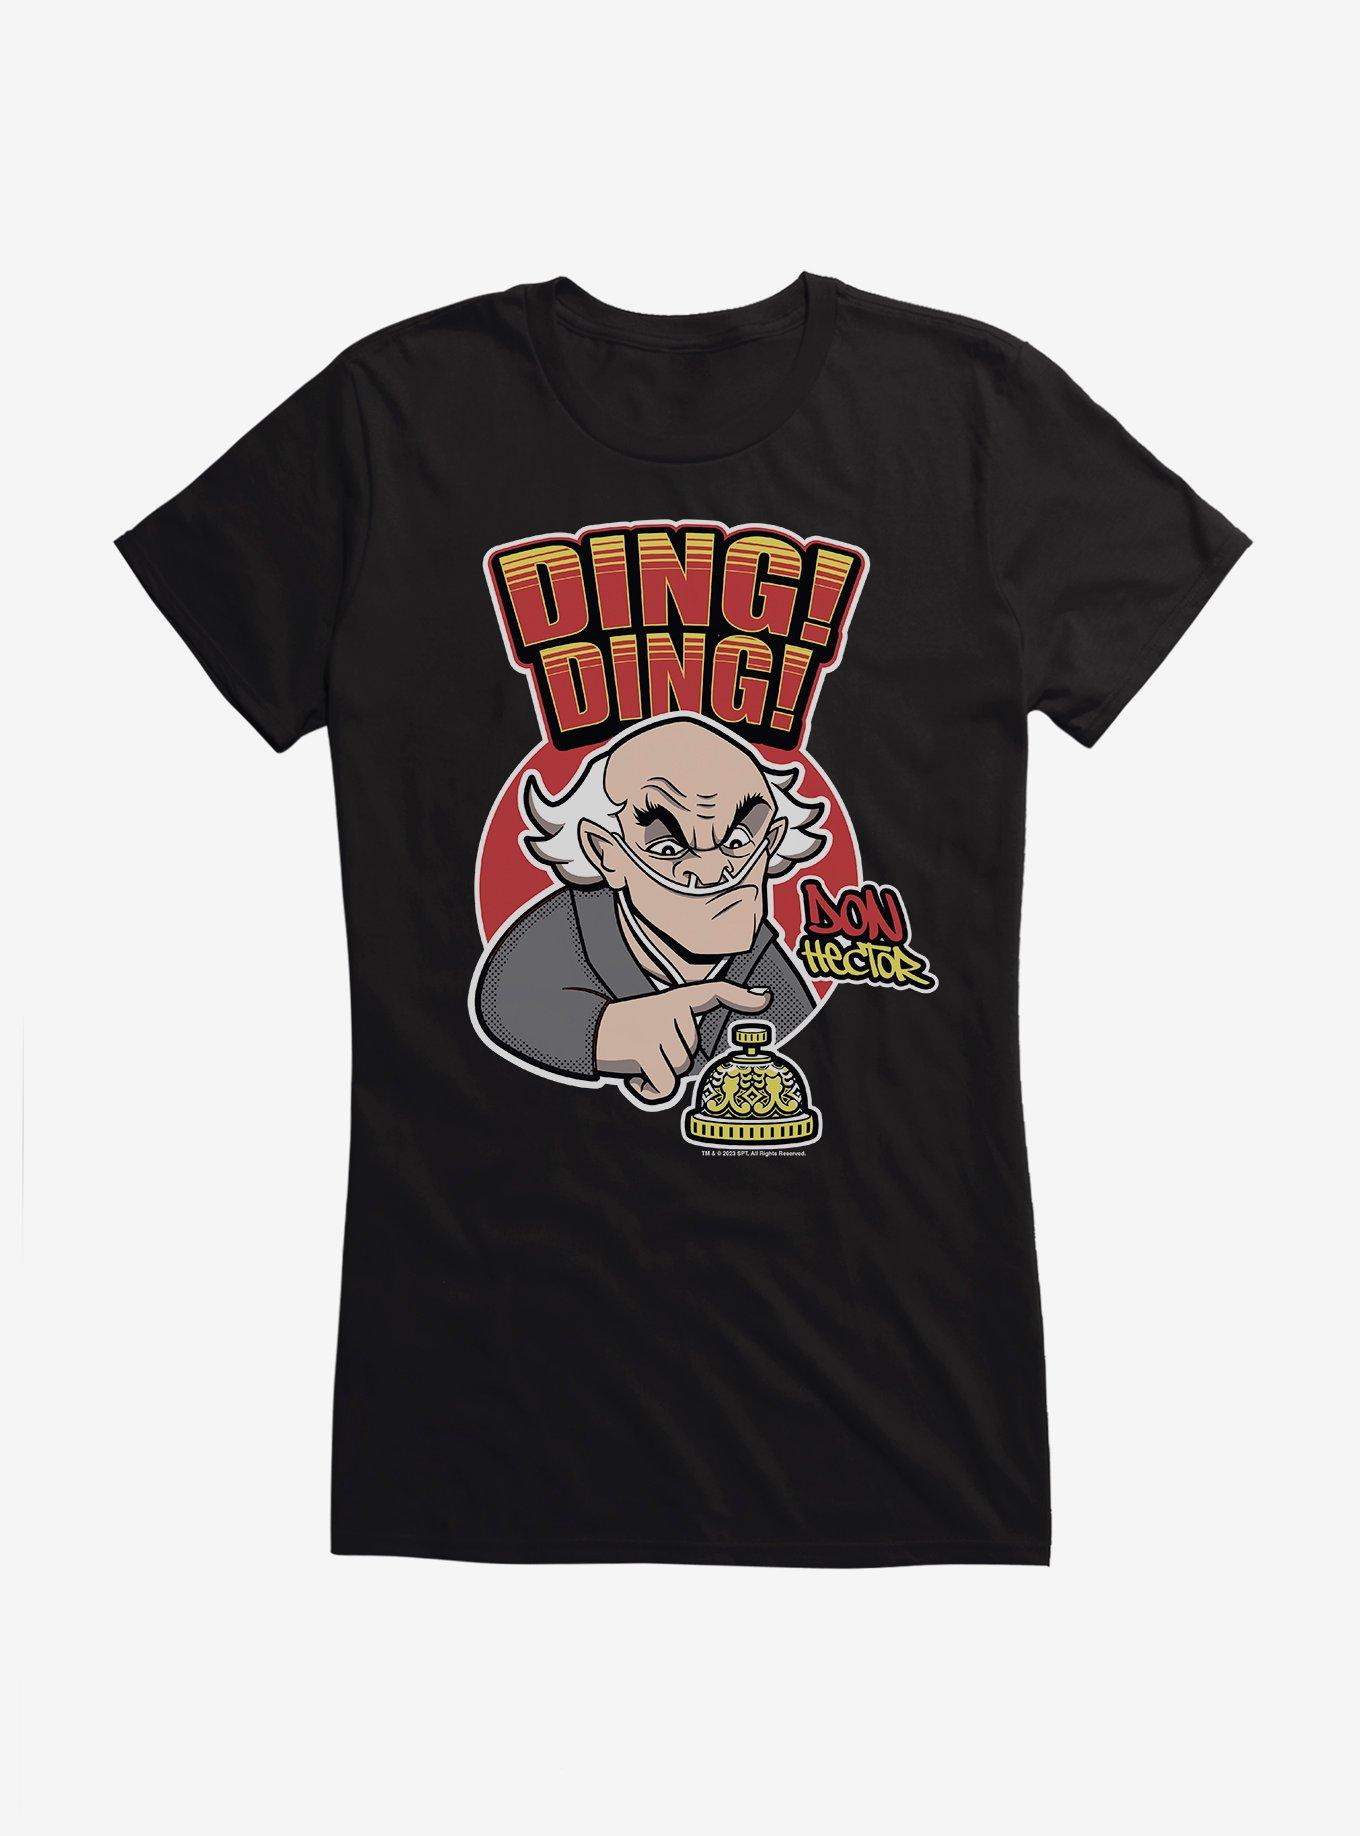 Breaking Bad Ding! Ding! Girls T-Shirt, , hi-res